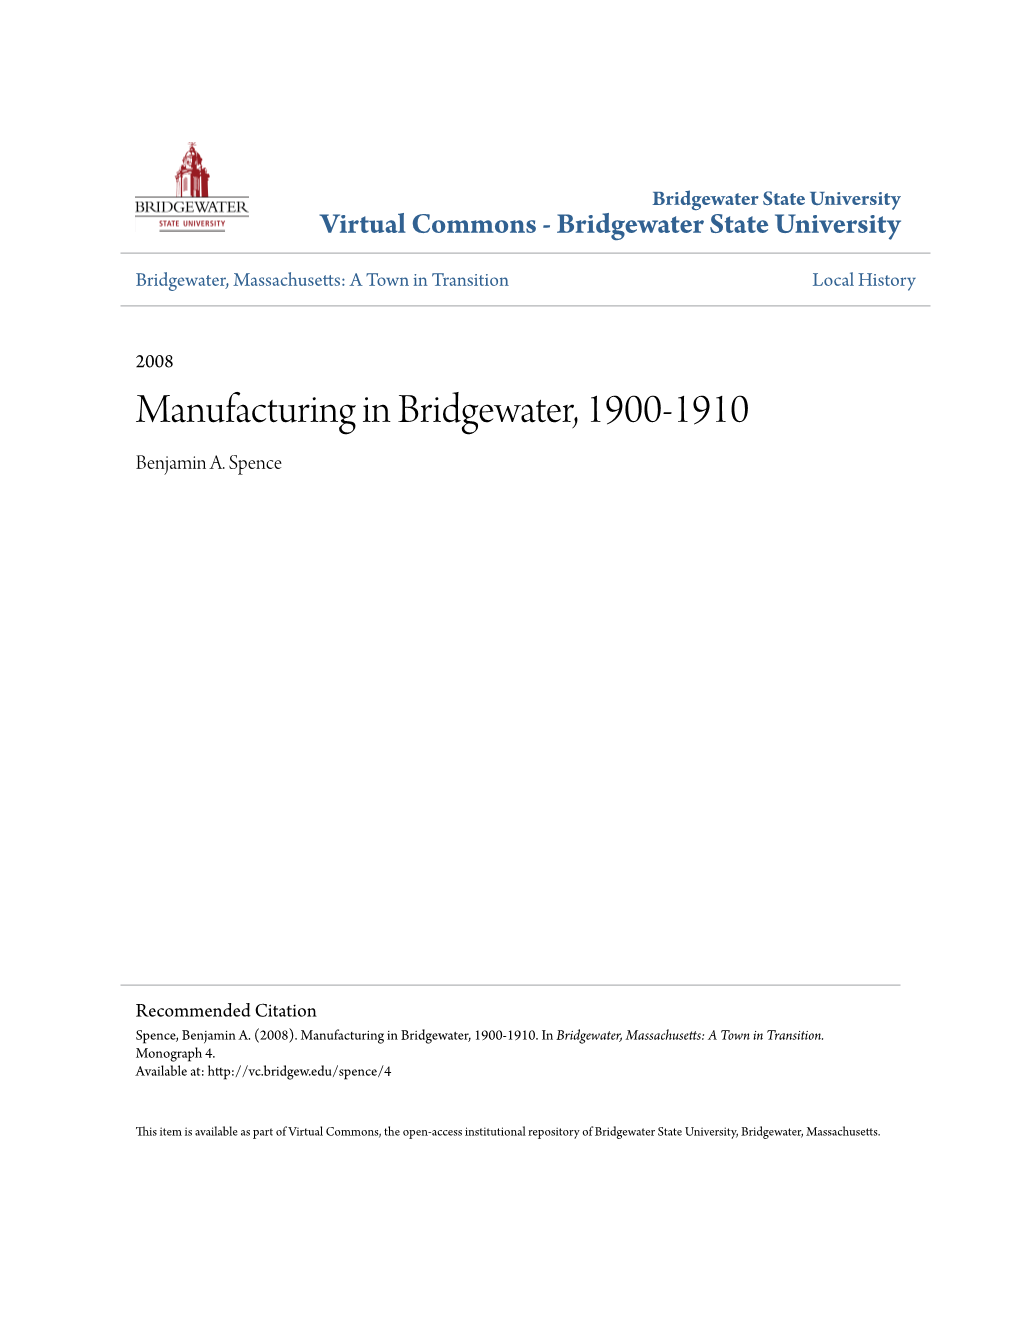 Manufacturing in Bridgewater, 1900-1910 Benjamin A